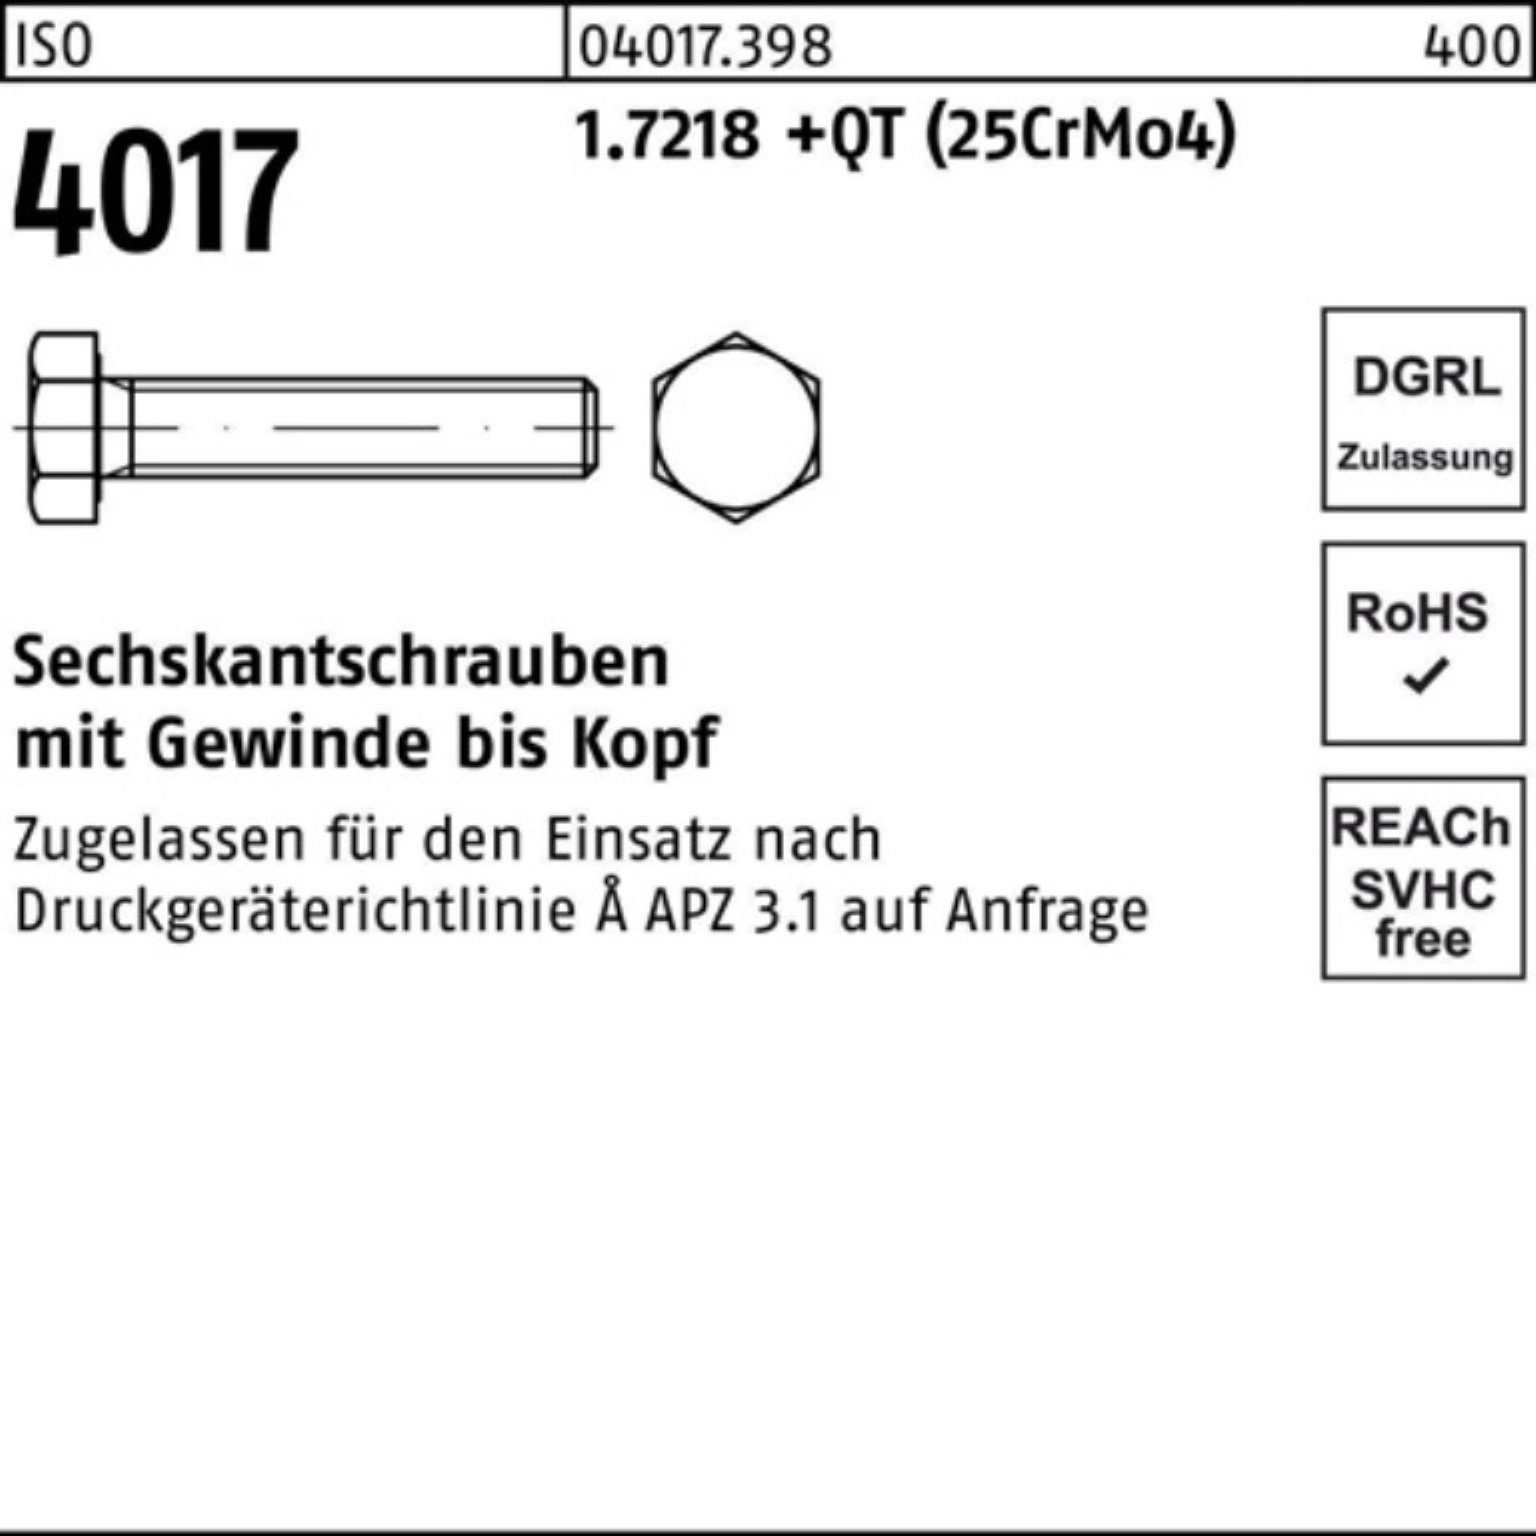 Bufab Sechskantschraube 100er Pack 1.7218 120 4017 VG ISO (25CrMo4) Sechskantschraube M36x +QT